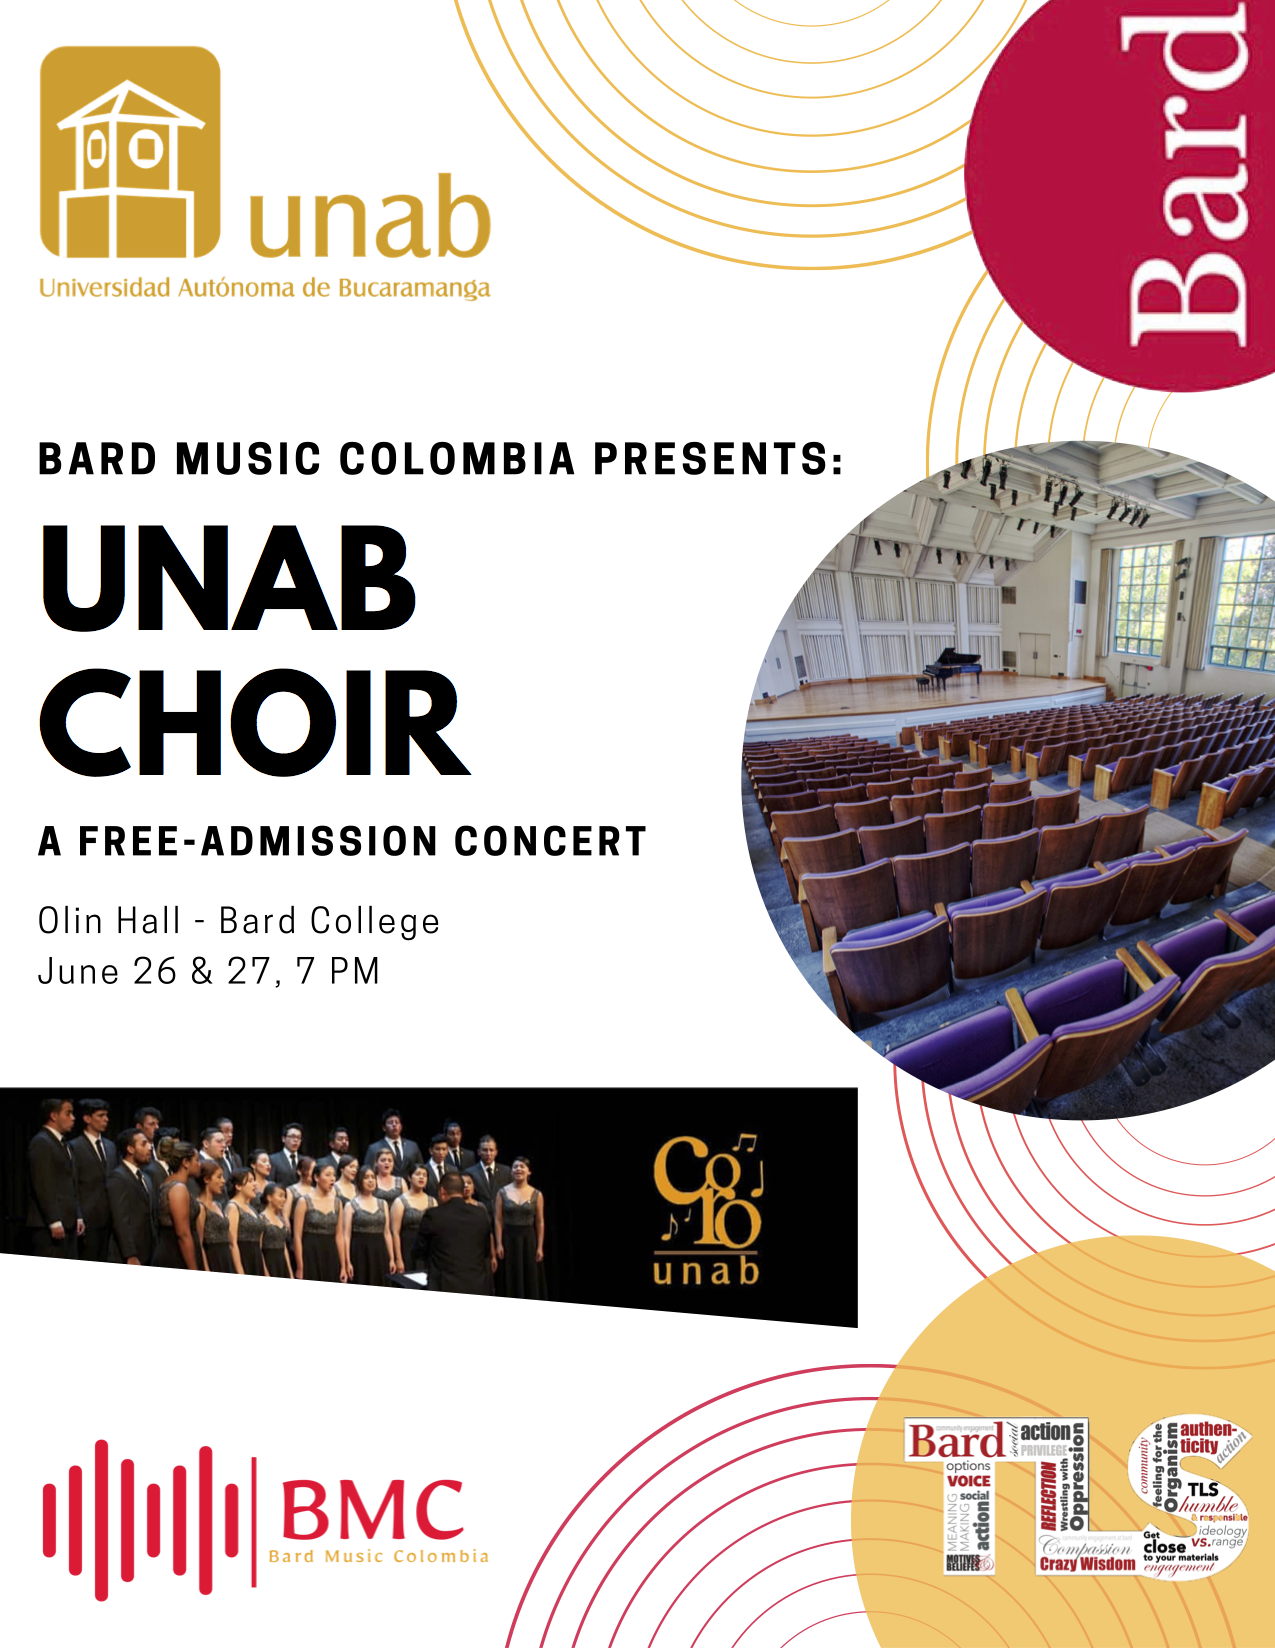 Bard Music Colombia Presents:
UNAB Choir